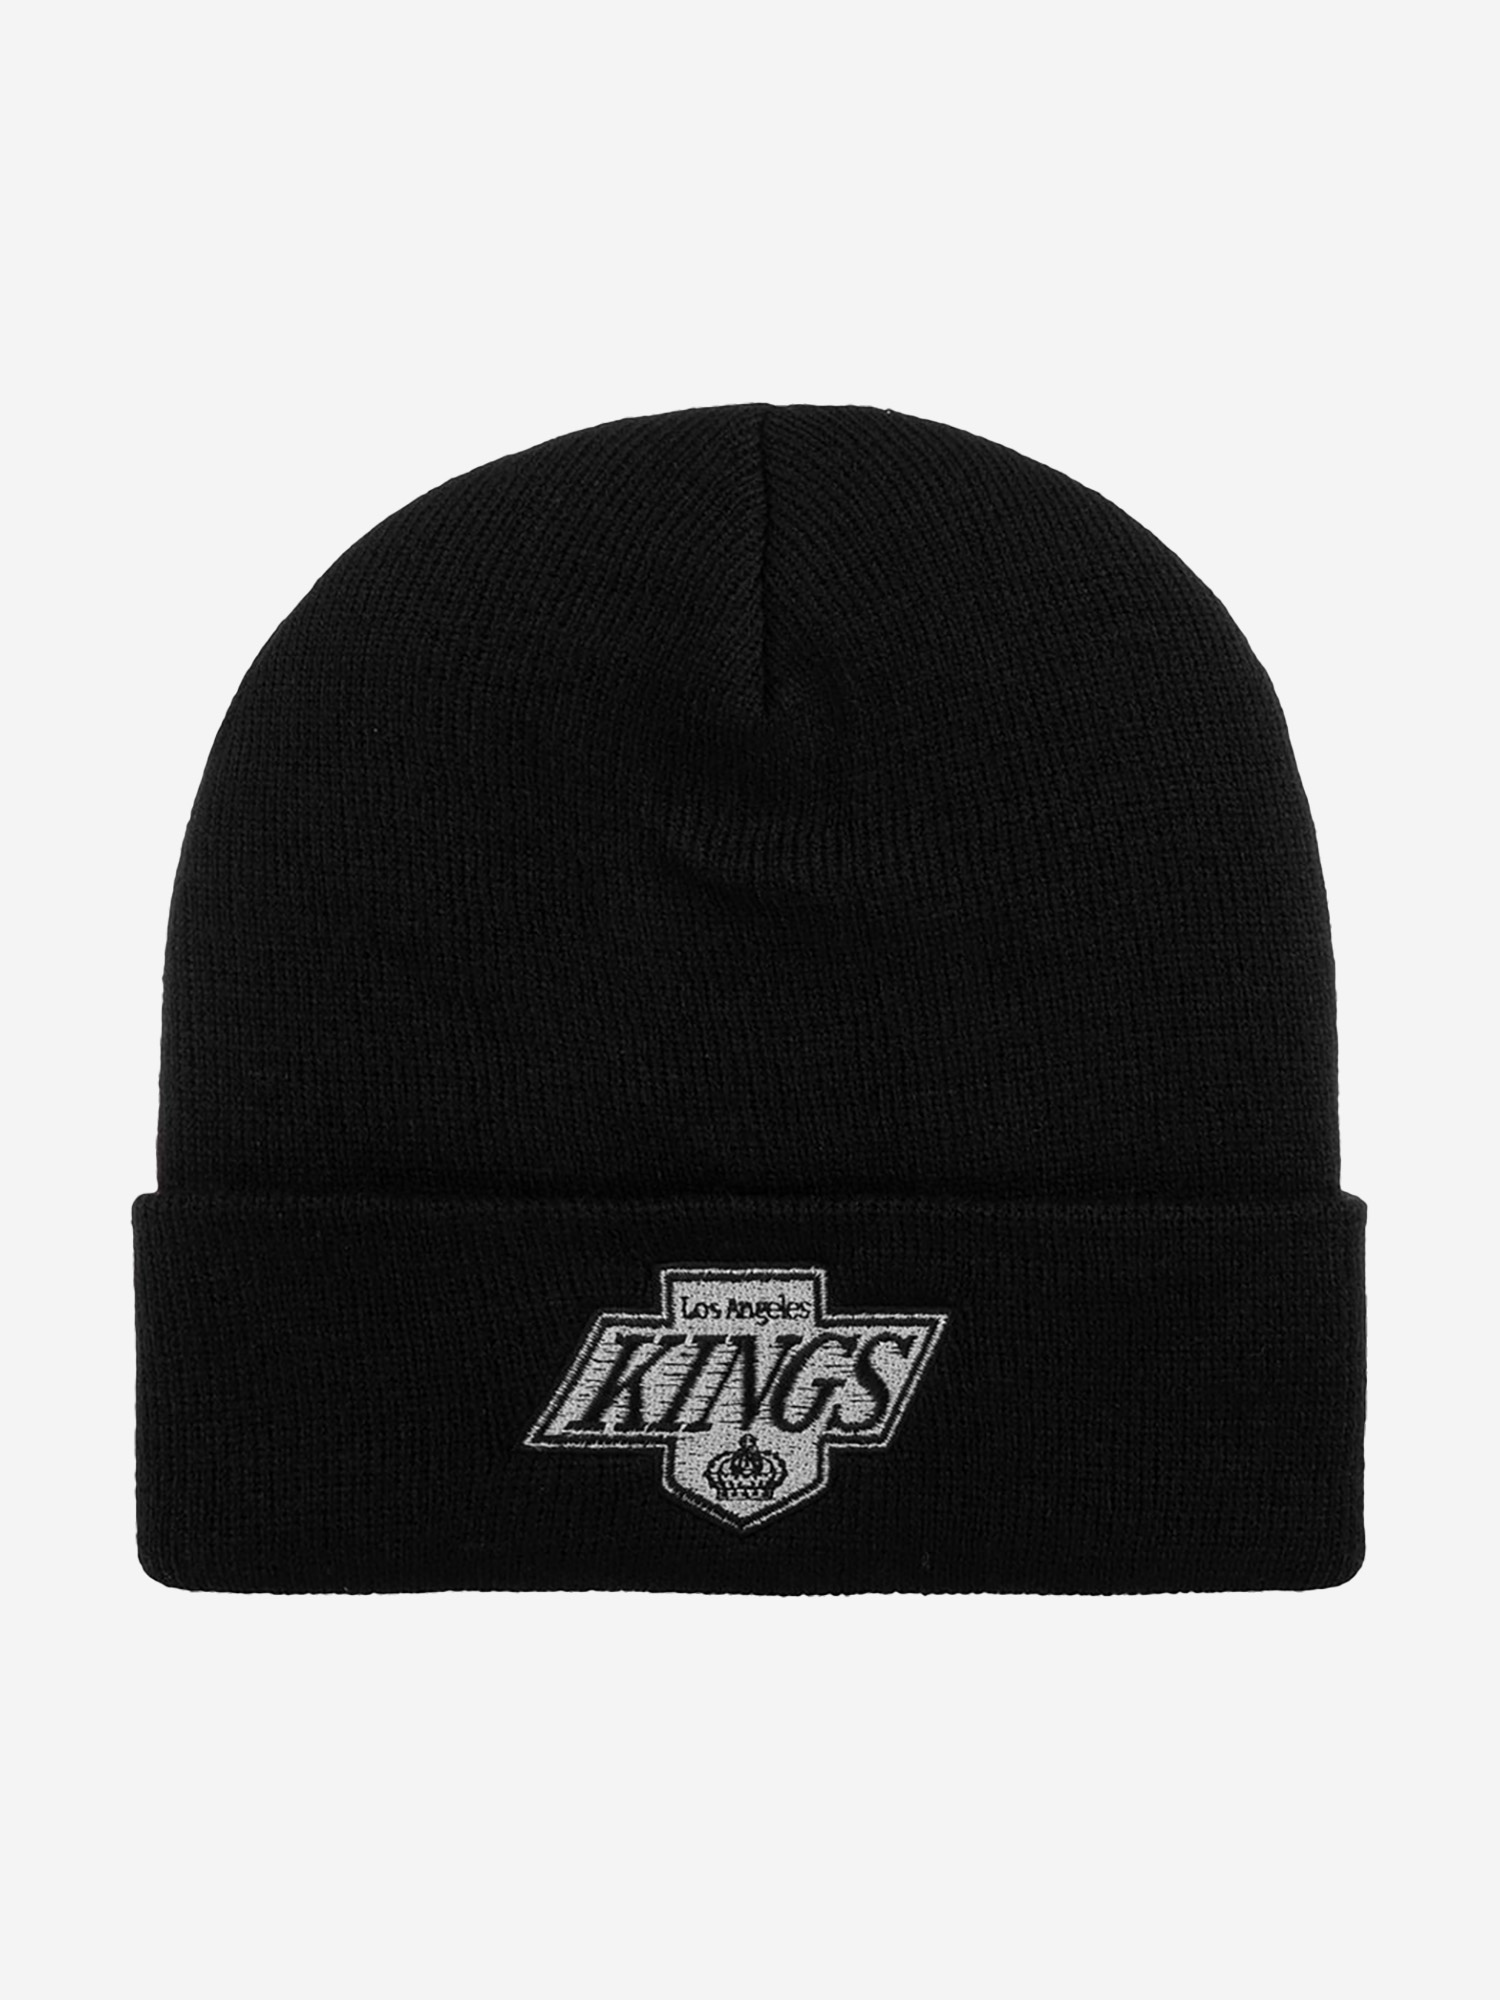 Шапка с отворотом AMERICAN NEEDLE 21019A-LAK Los Angeles Kings Cuffed Knit NHL (черный), Черный